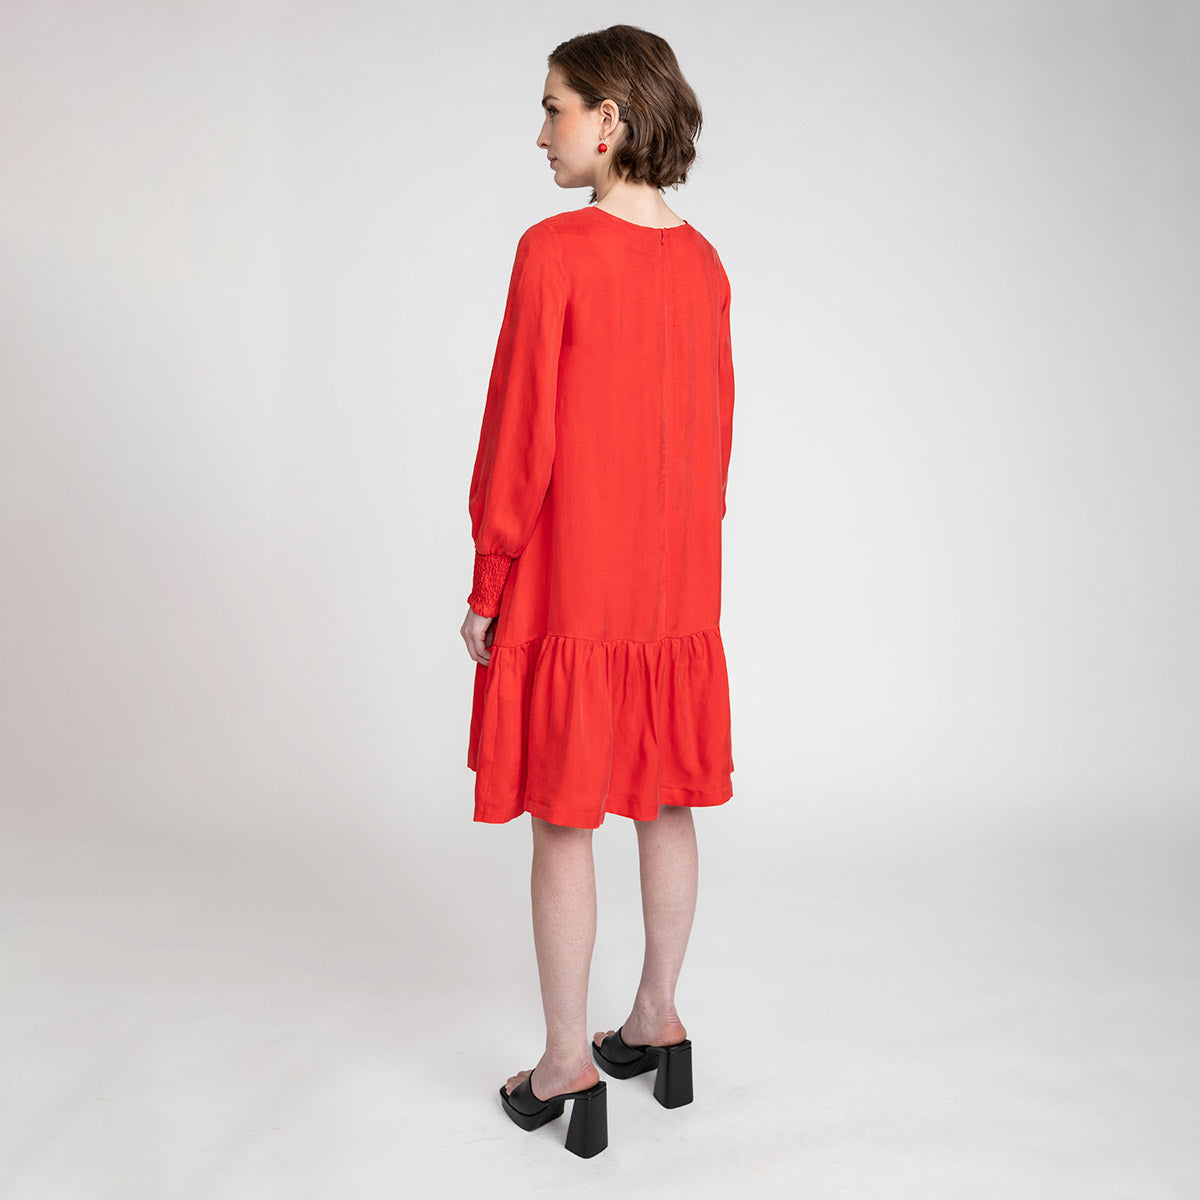 Verla dress, red